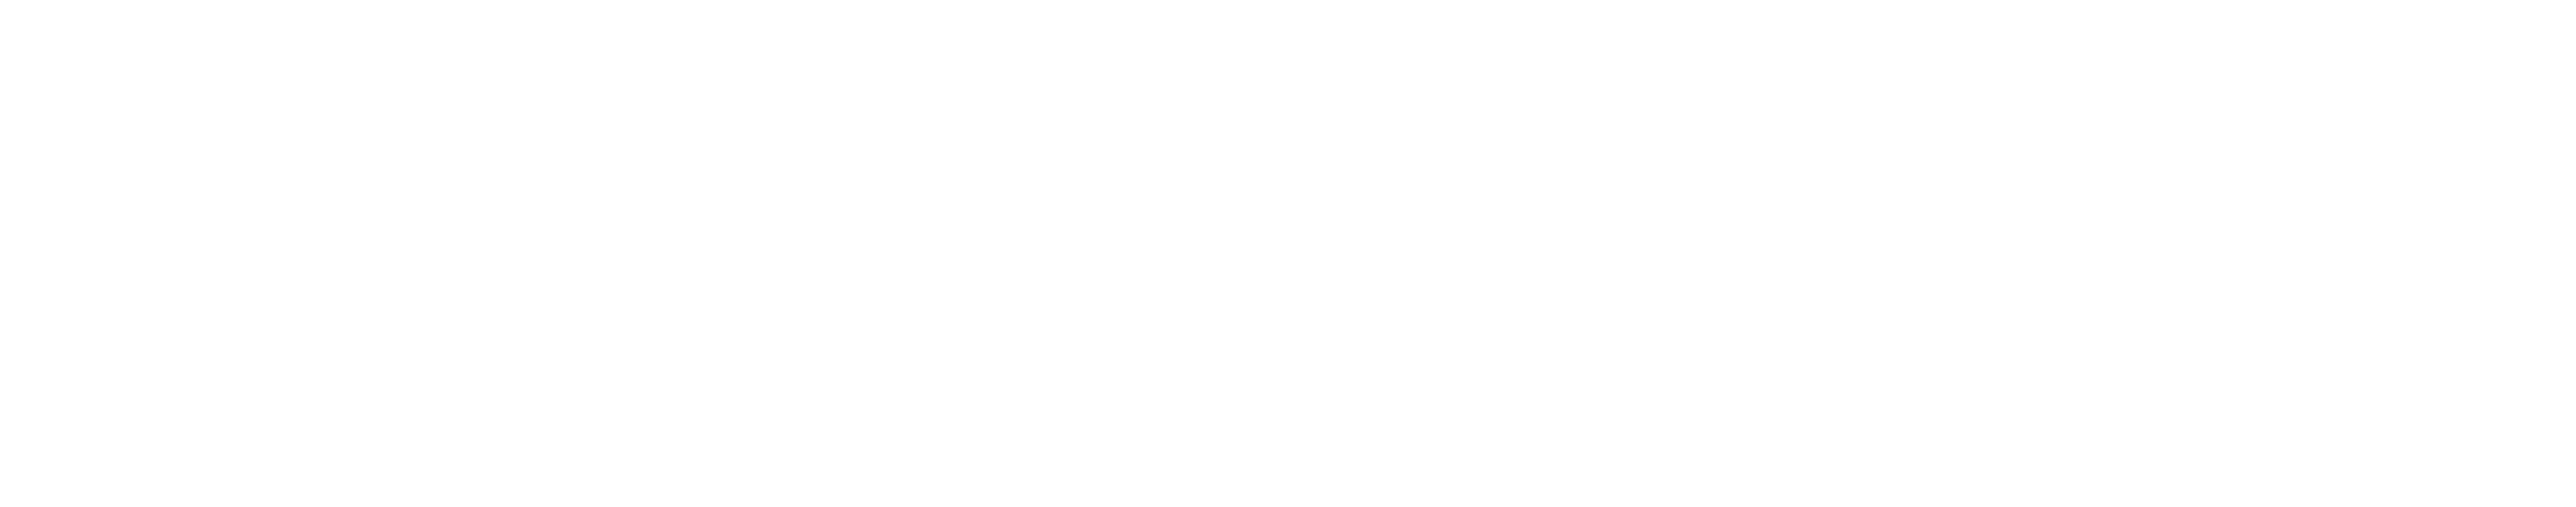 The Pet Community